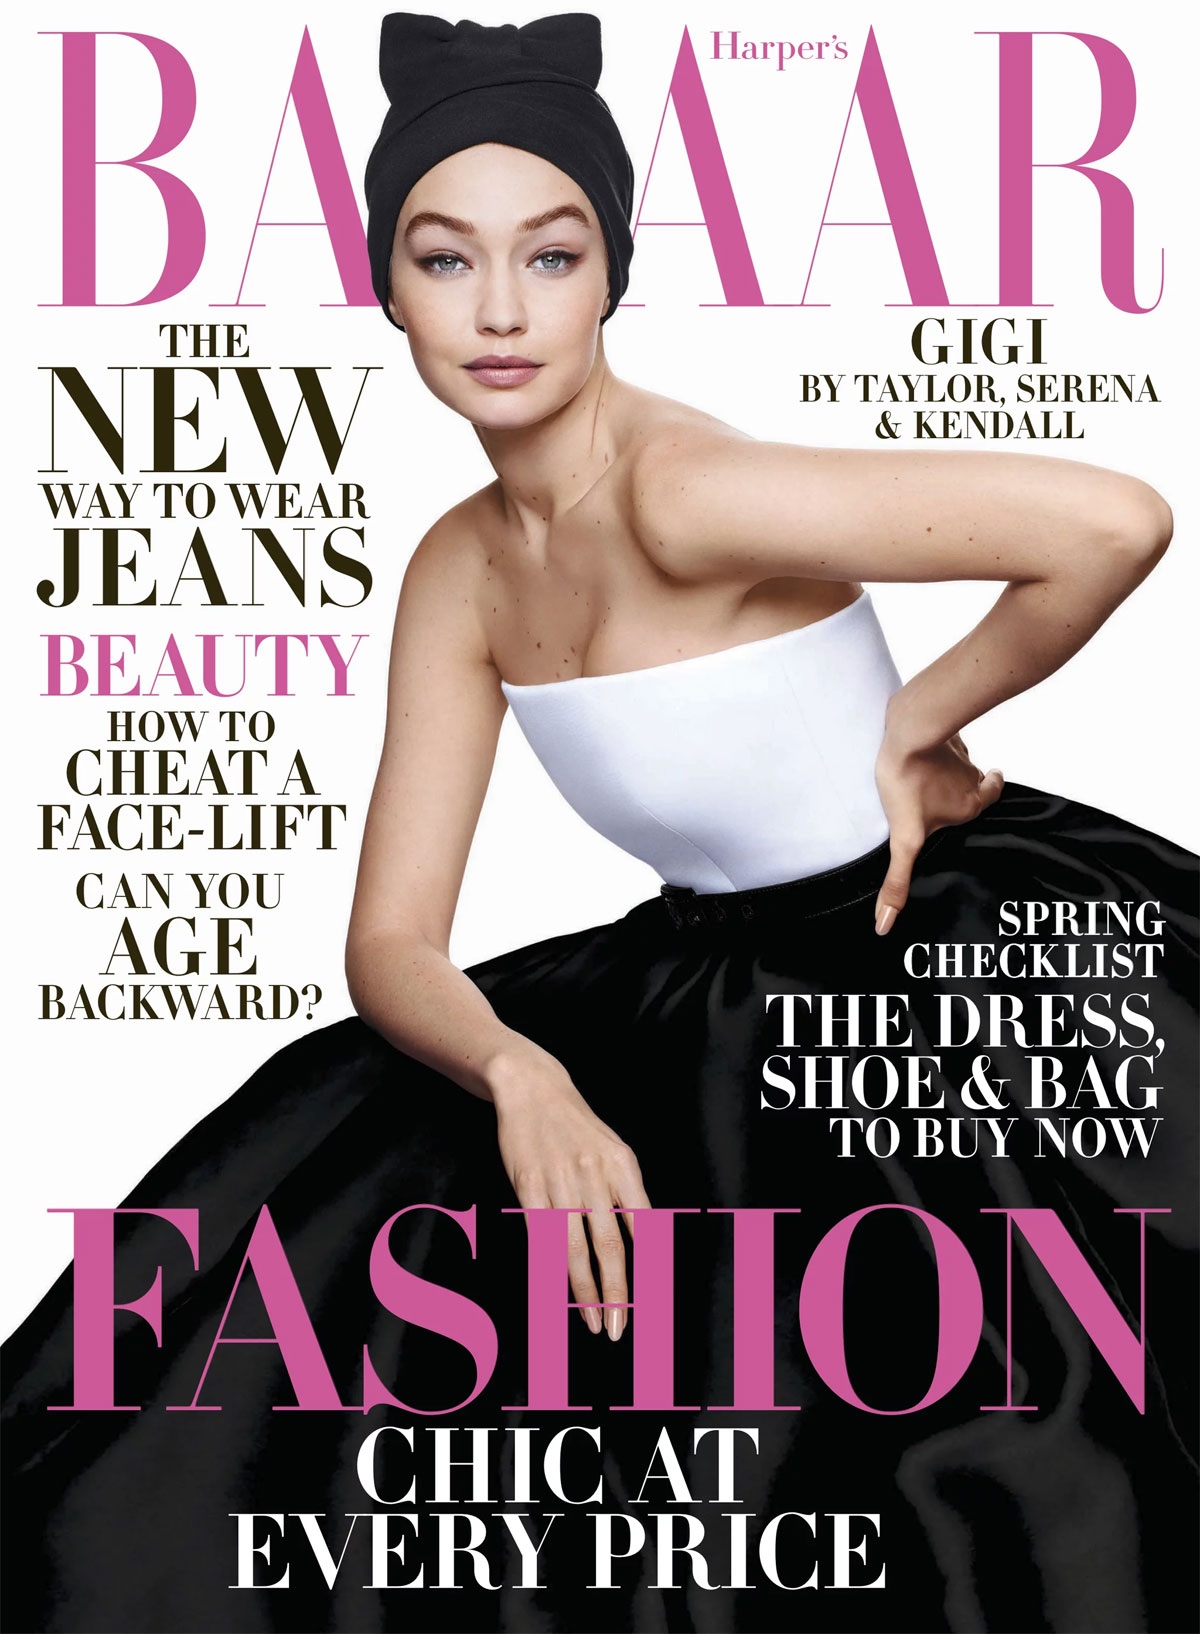 Harper's Bazaar April 2020 Gigi Hadid